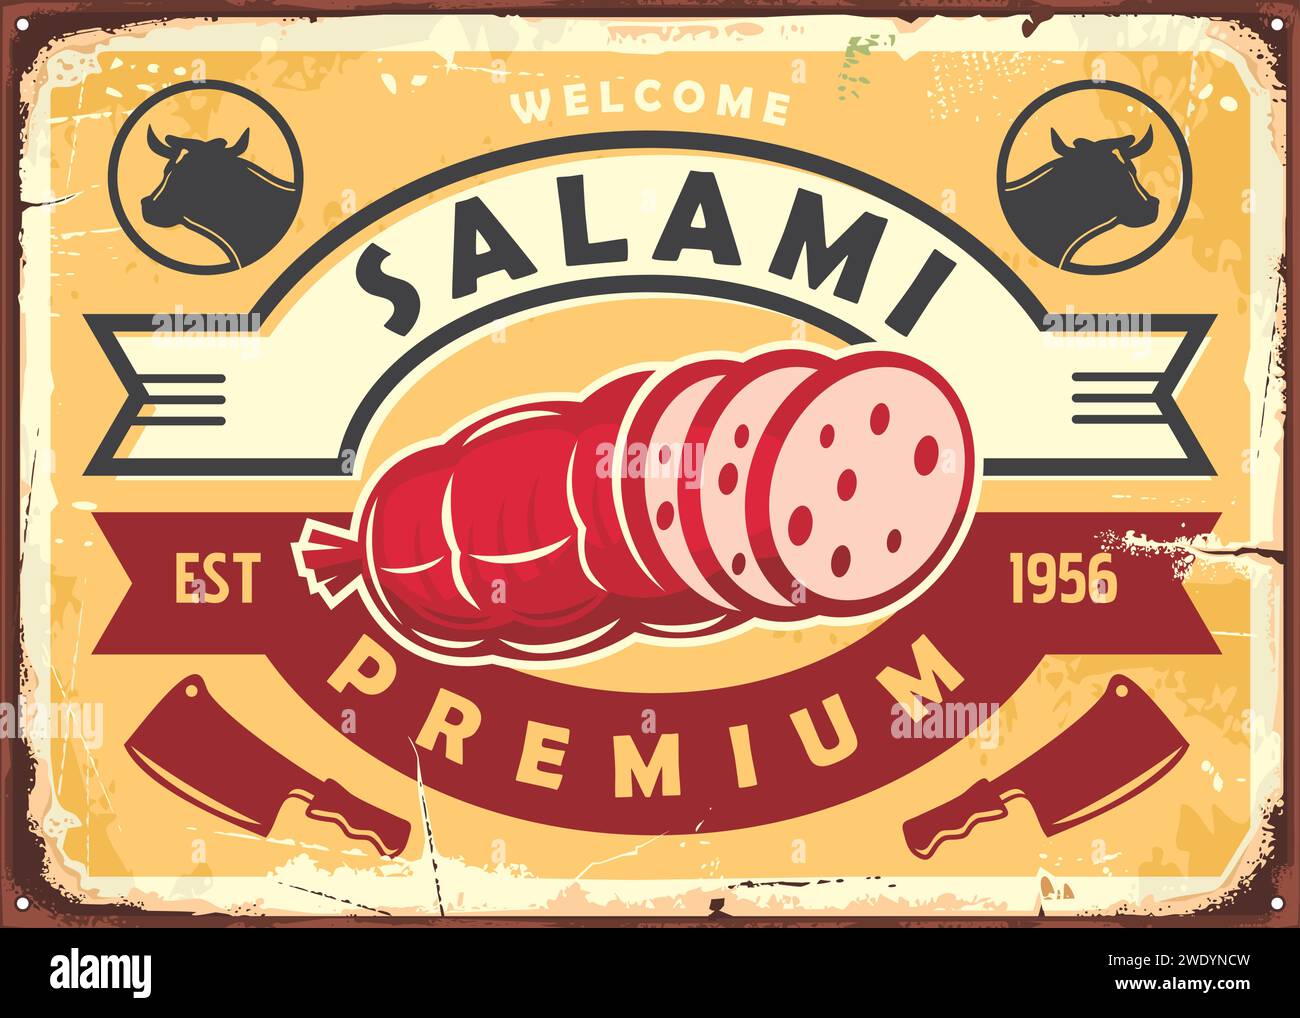 Salami retro sign design. Beef sausages vintage ad. Food vector illustration. Stock Vector